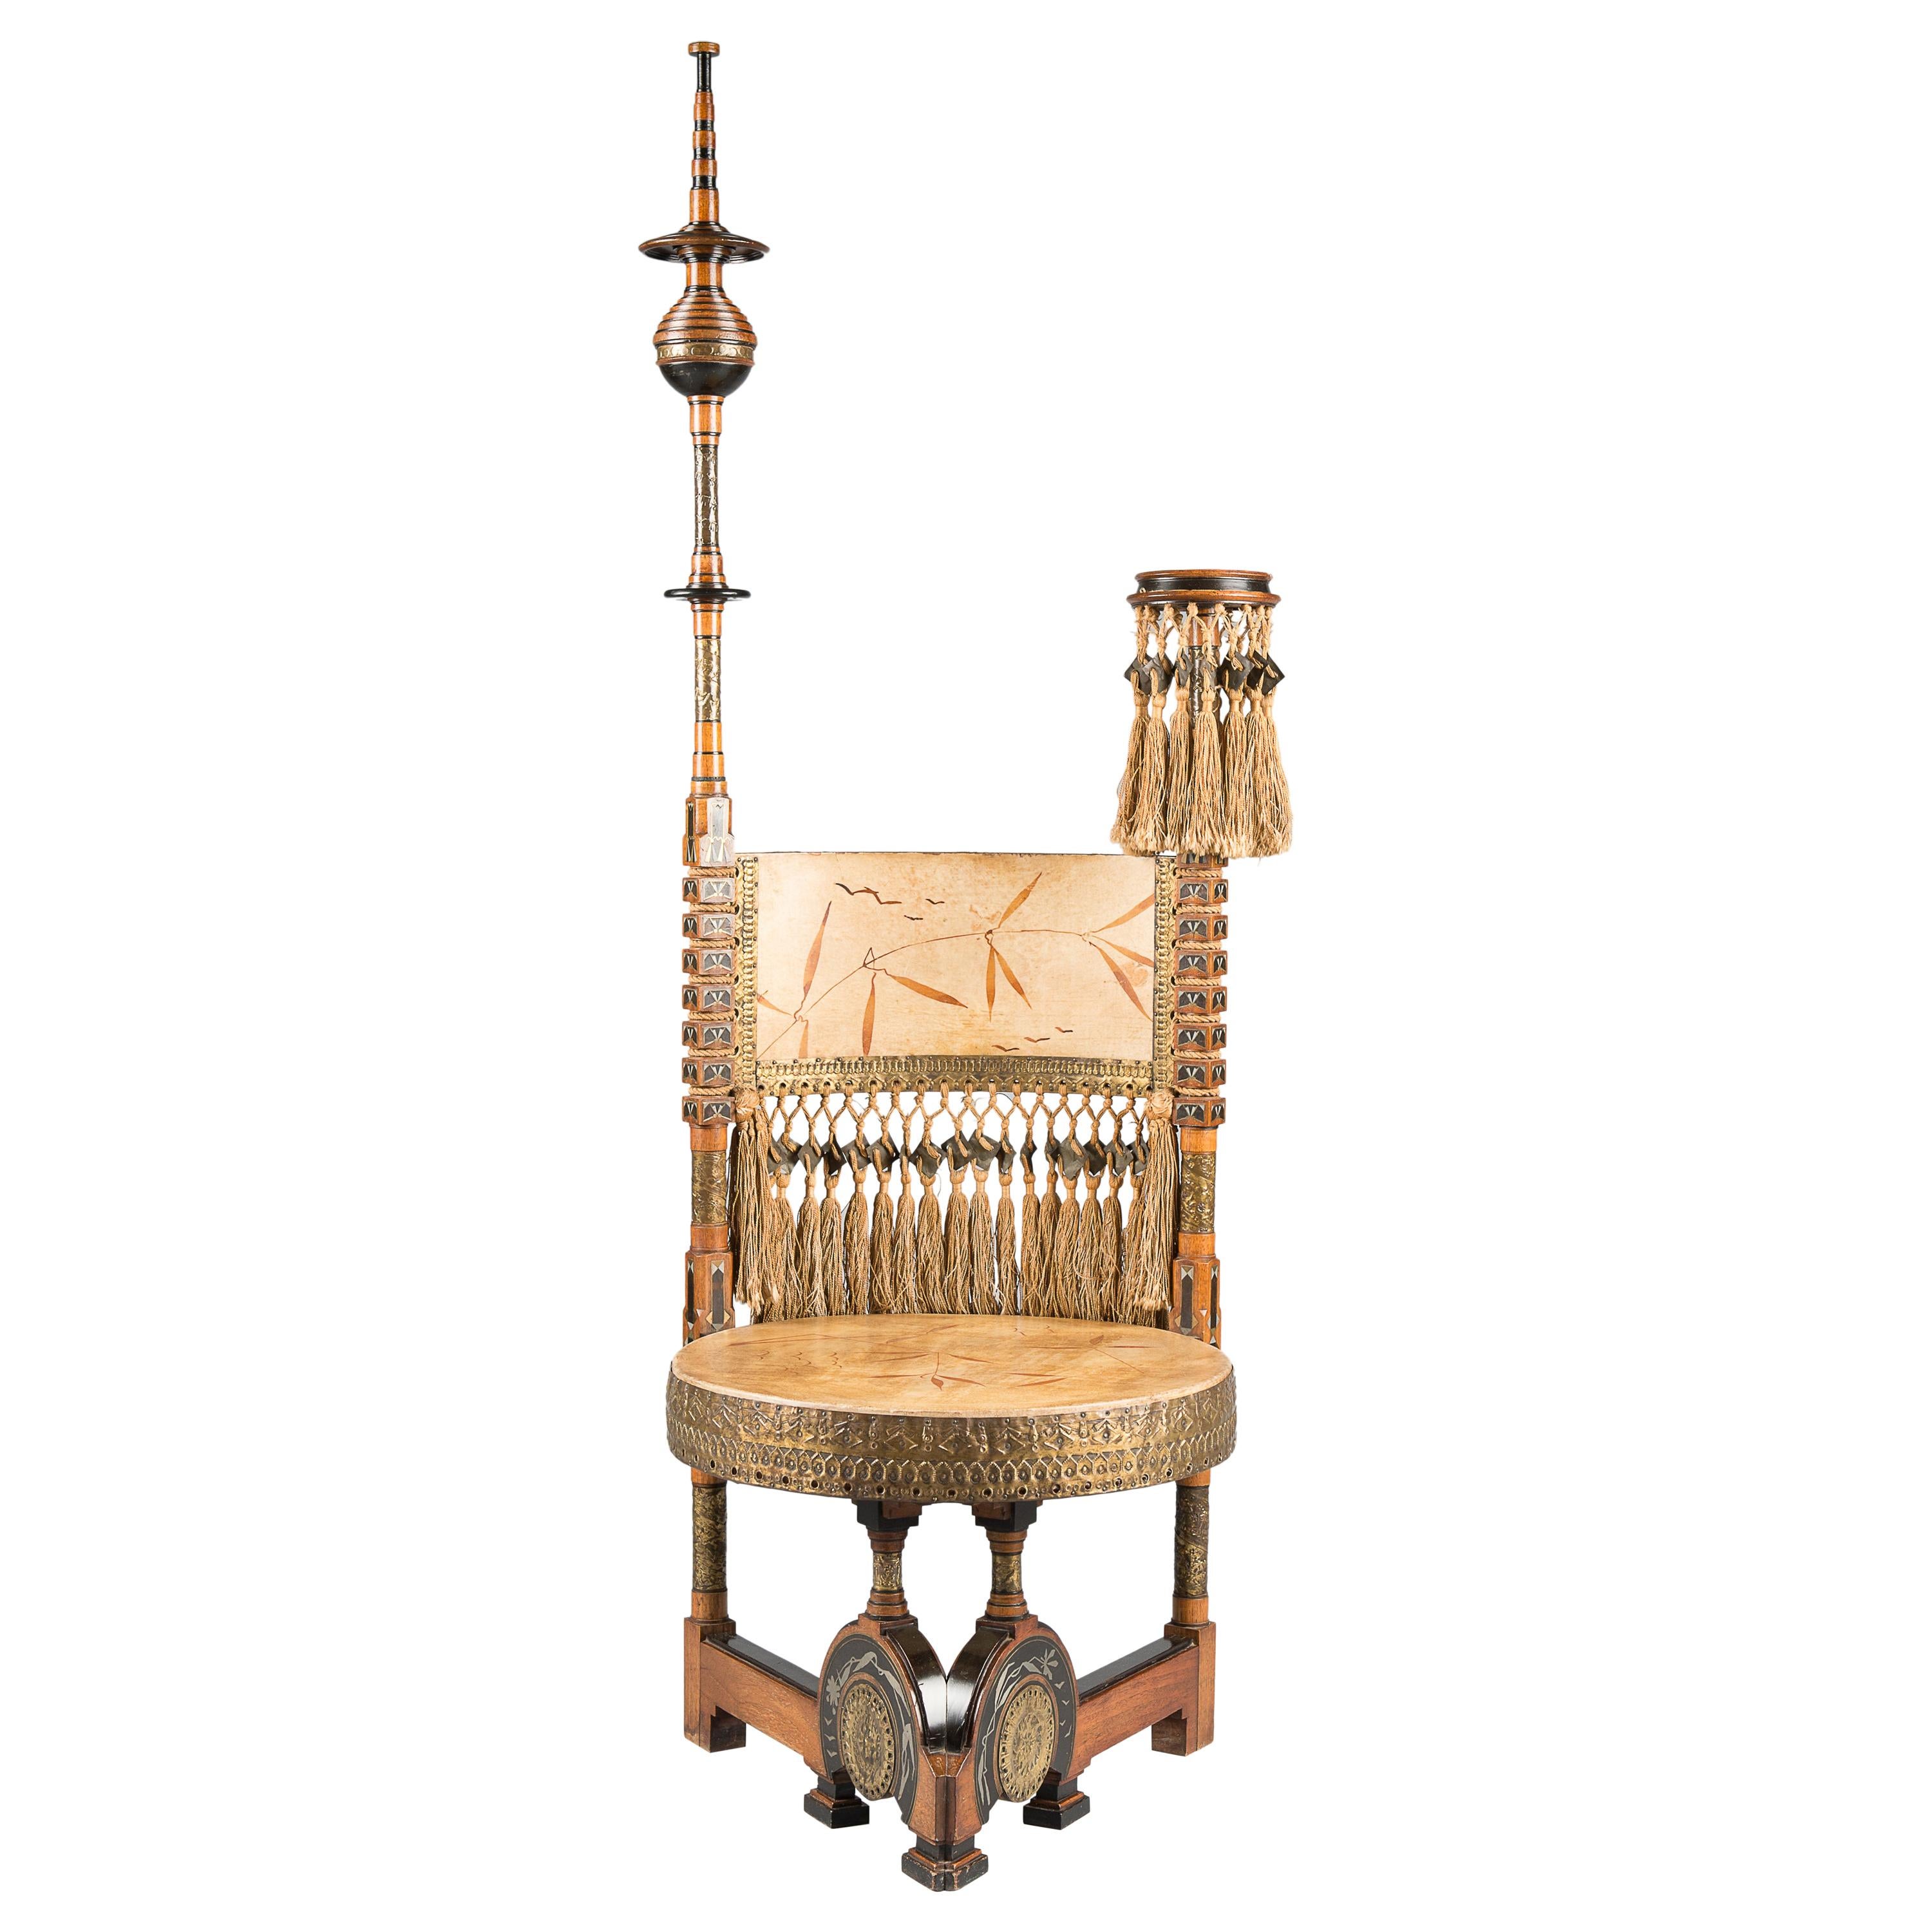 Carlo Bugatti Throne Chair - 2 For Sale on 1stDibs | carlo bugatti throne  chair for sale, bugatti throne chair price, bugati chair